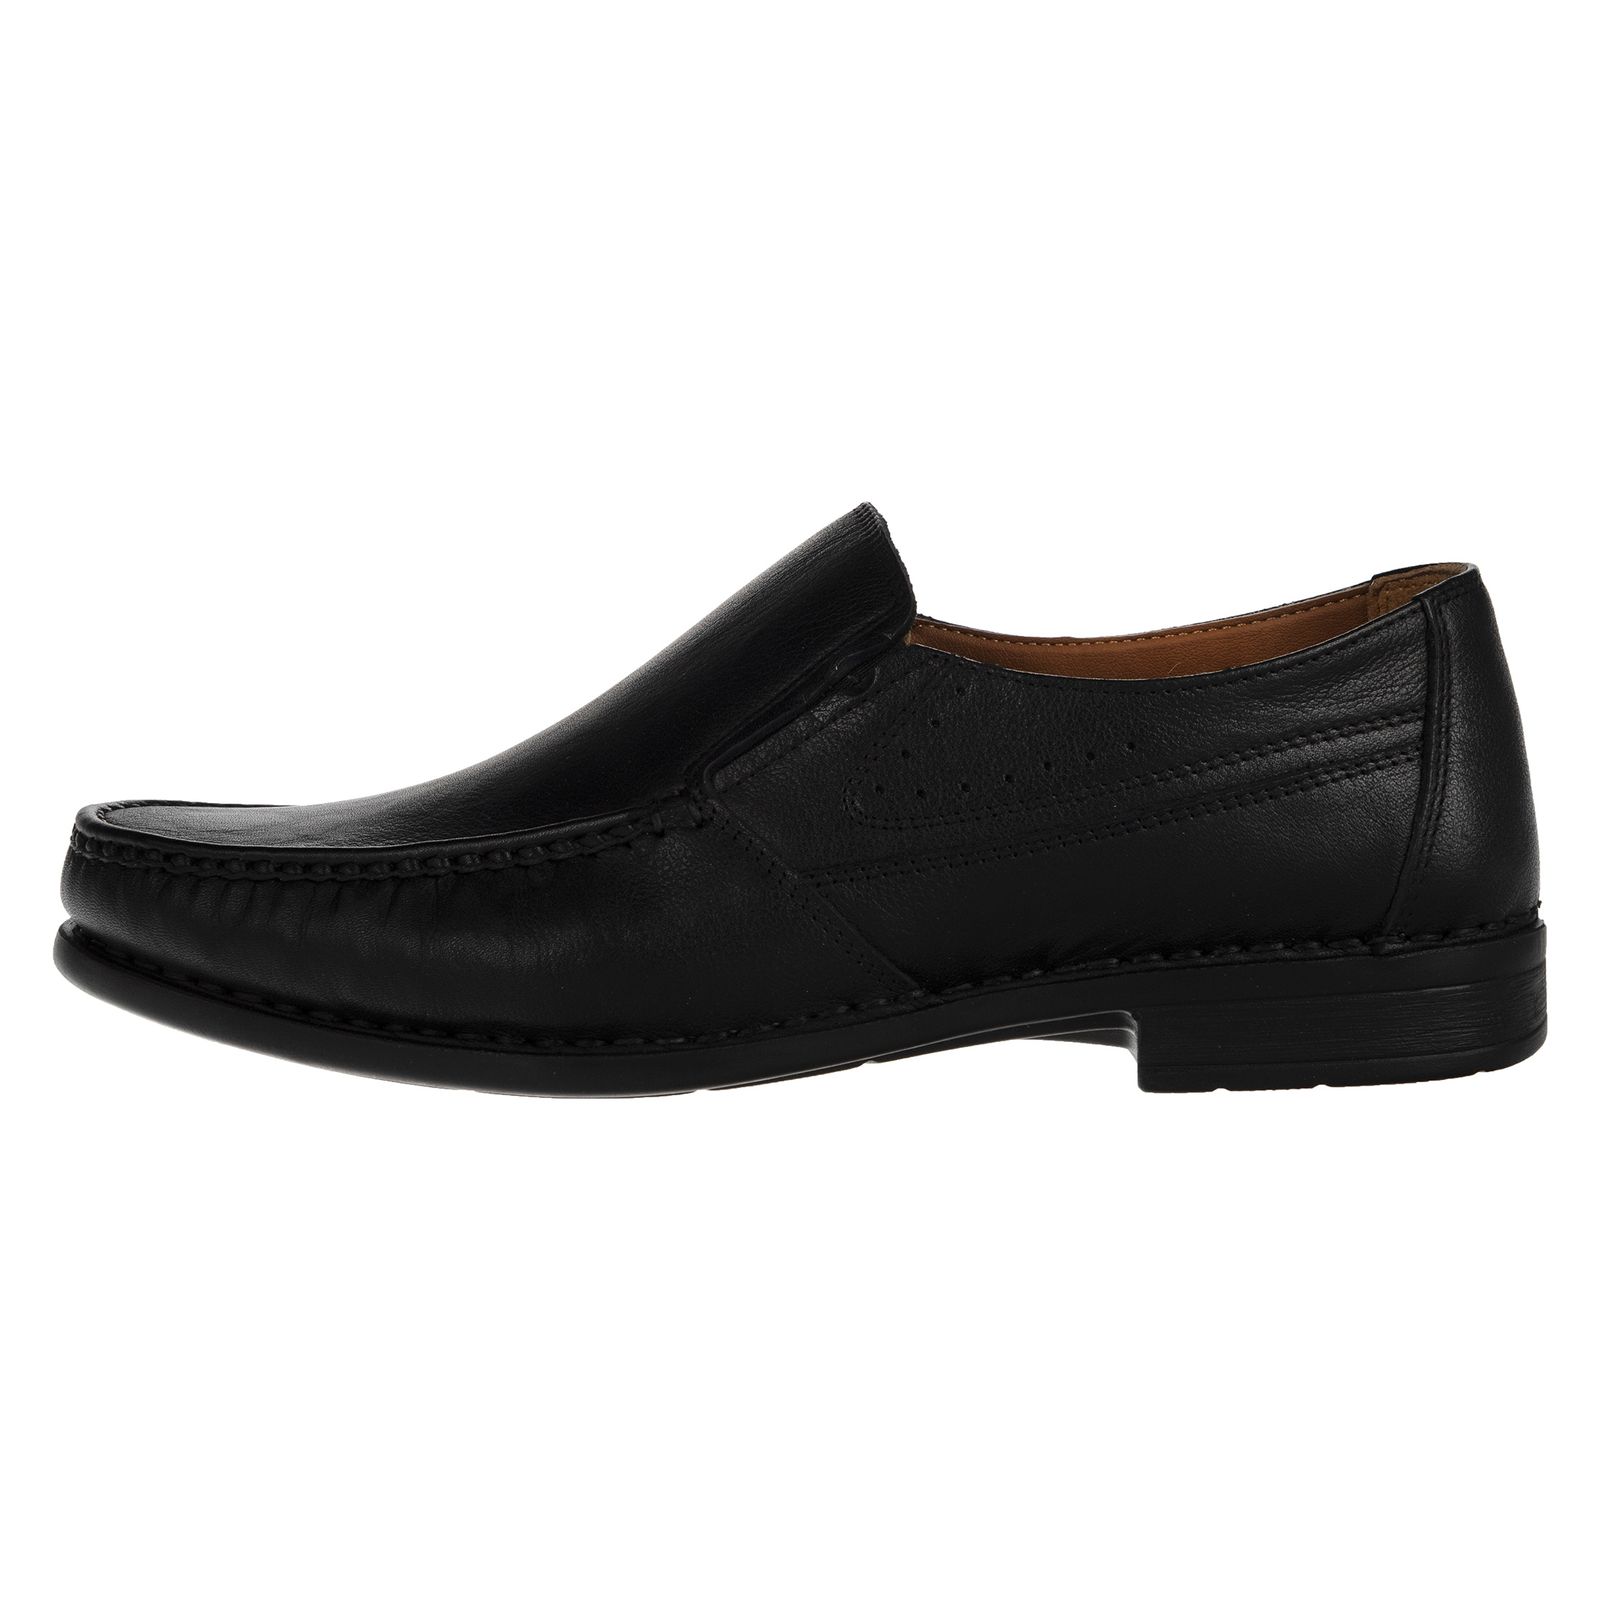 کفش روزمره مردانه پولاریس مدل 100294636-101 - مشکی - 1